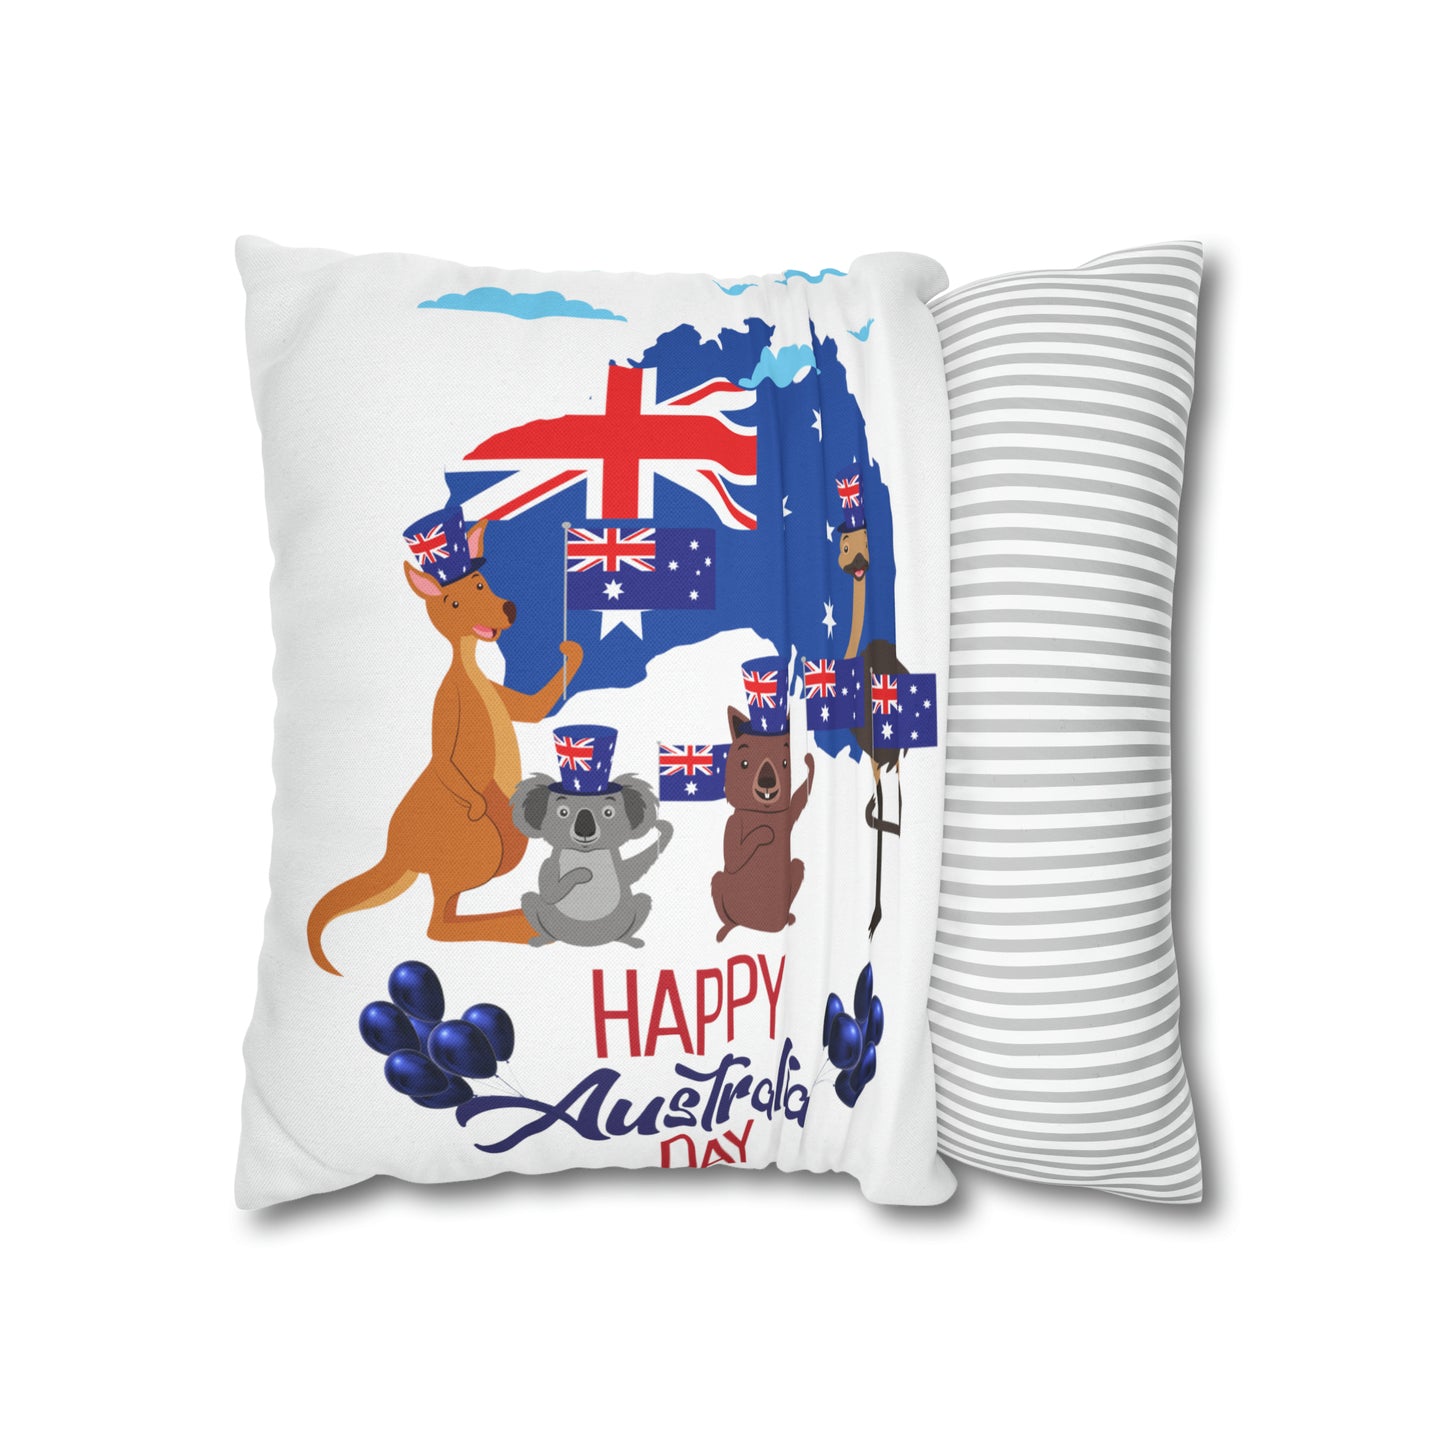 Australia Day Spun Polyester Square Pillow Case